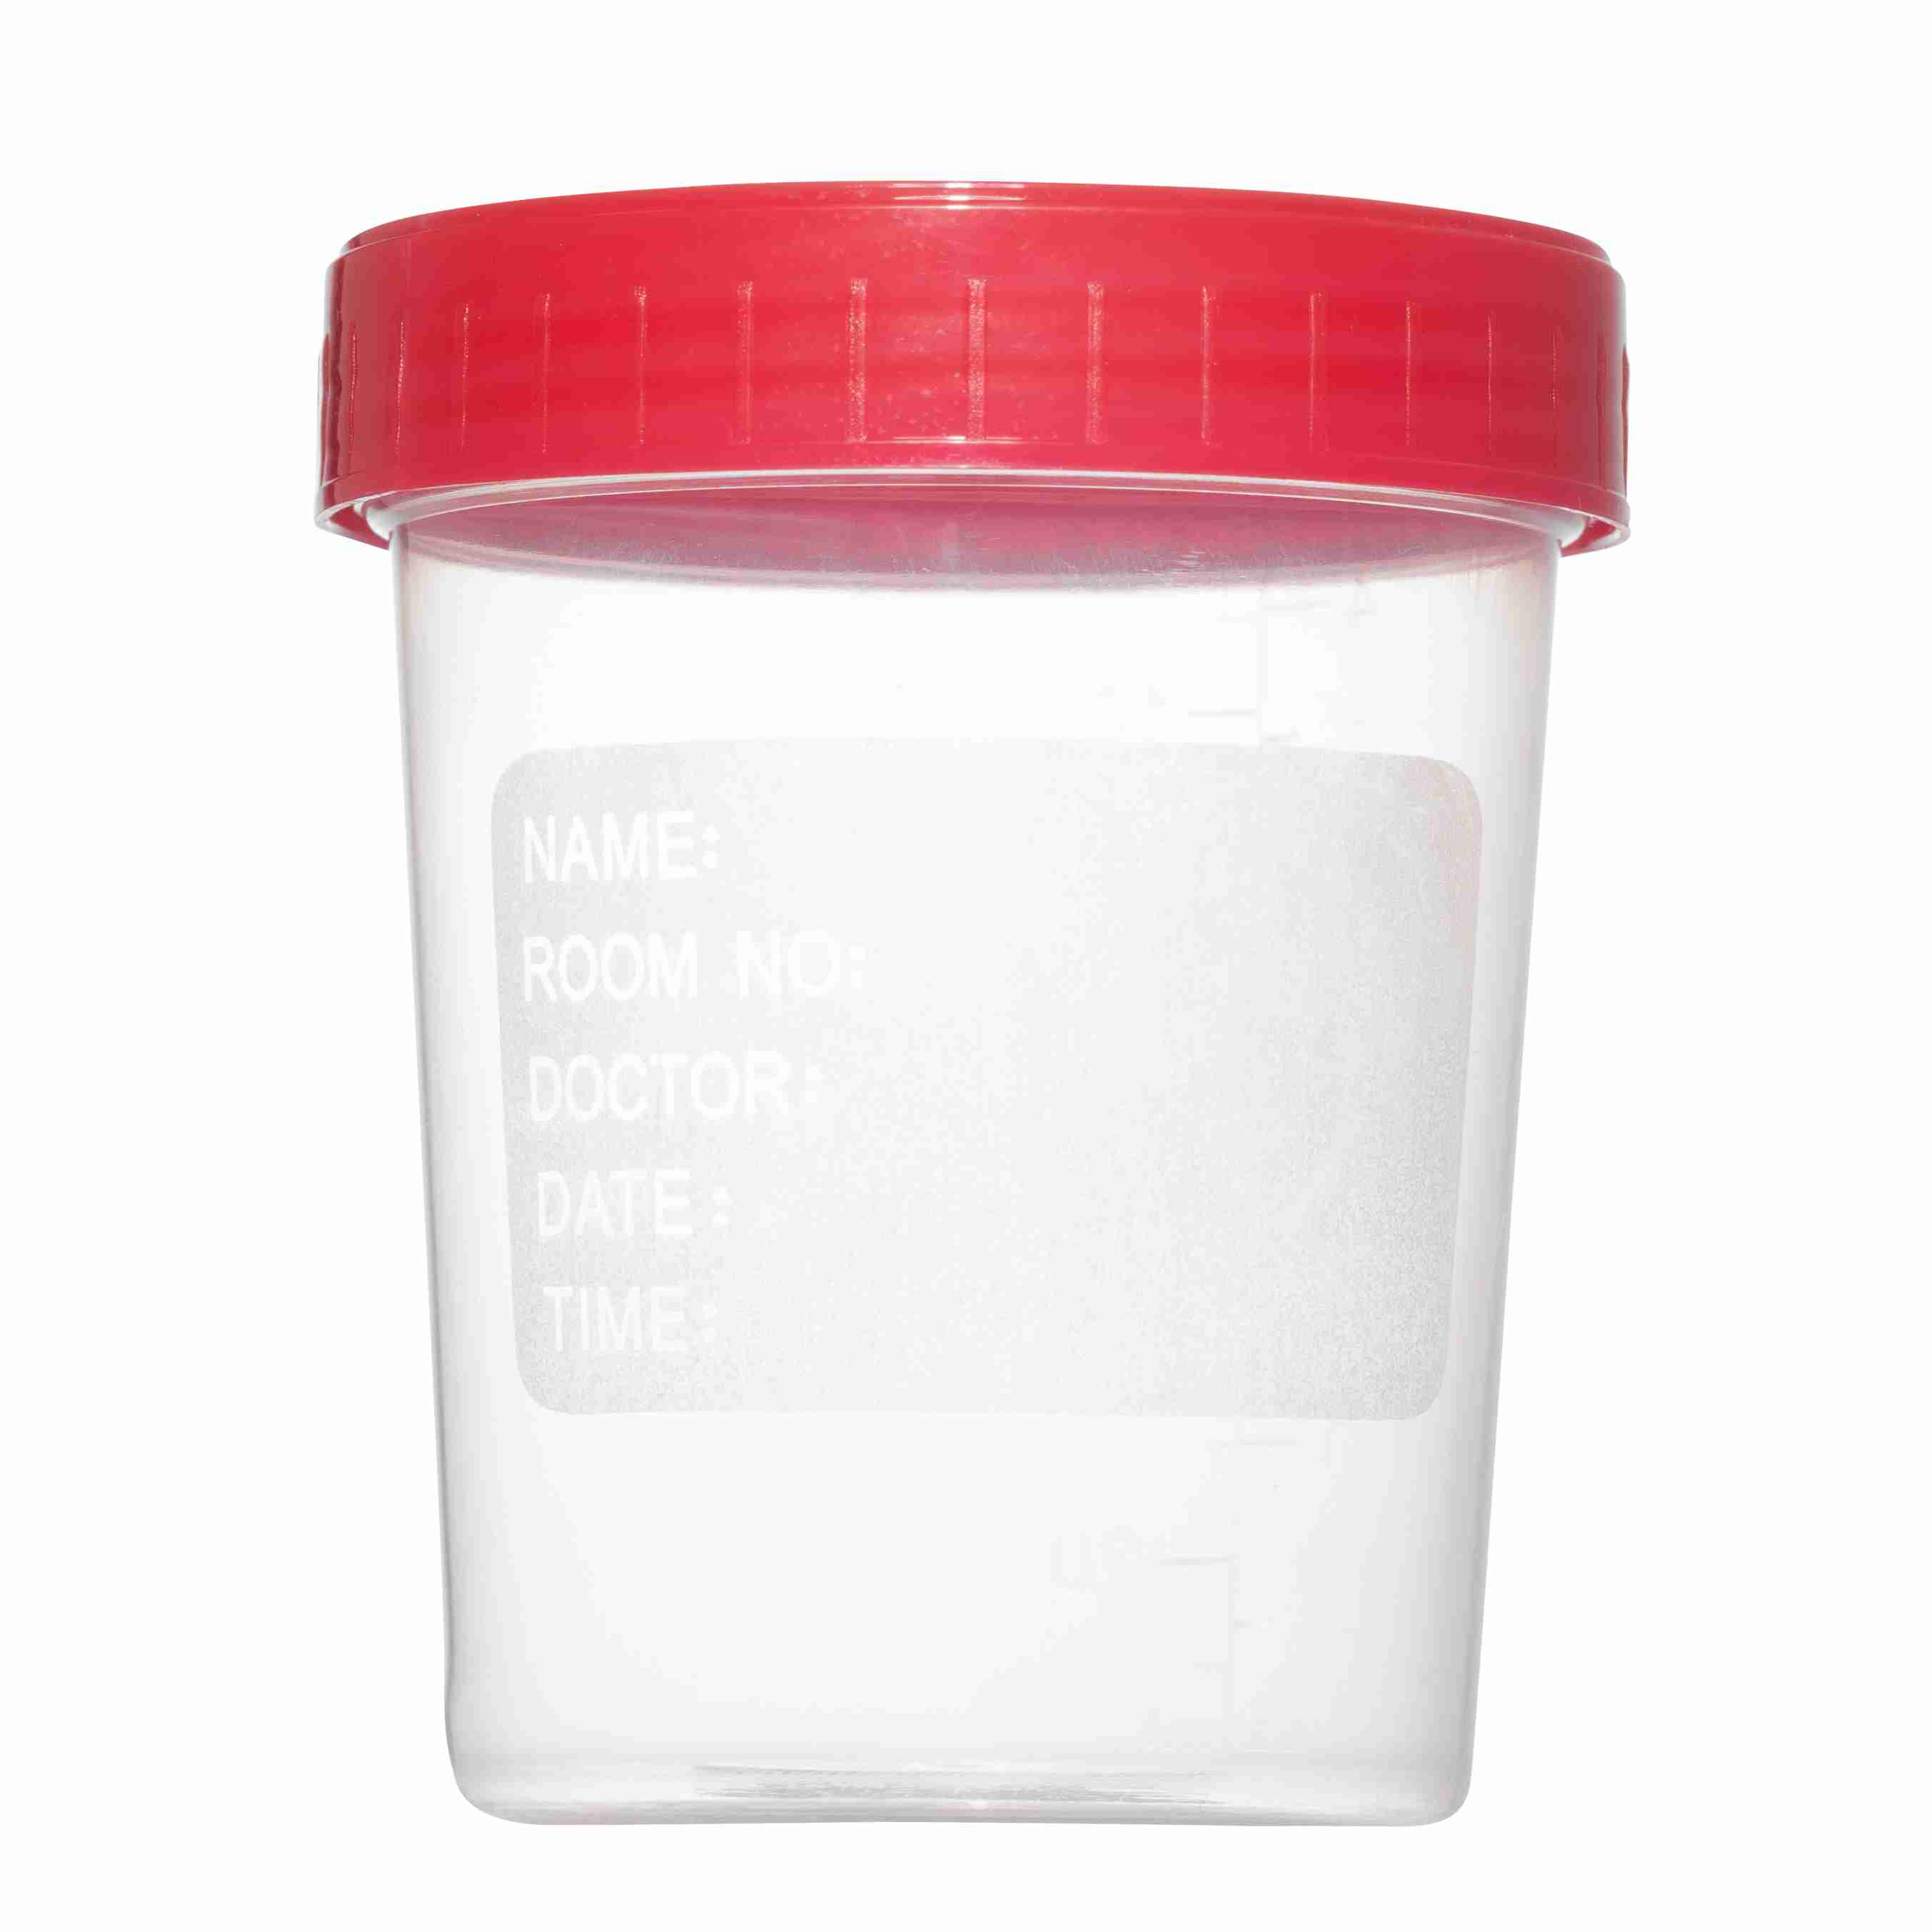 Taza de orina de 30 ml, taza de prueba de orina, taza de orina de plástico, contenedor de taburete